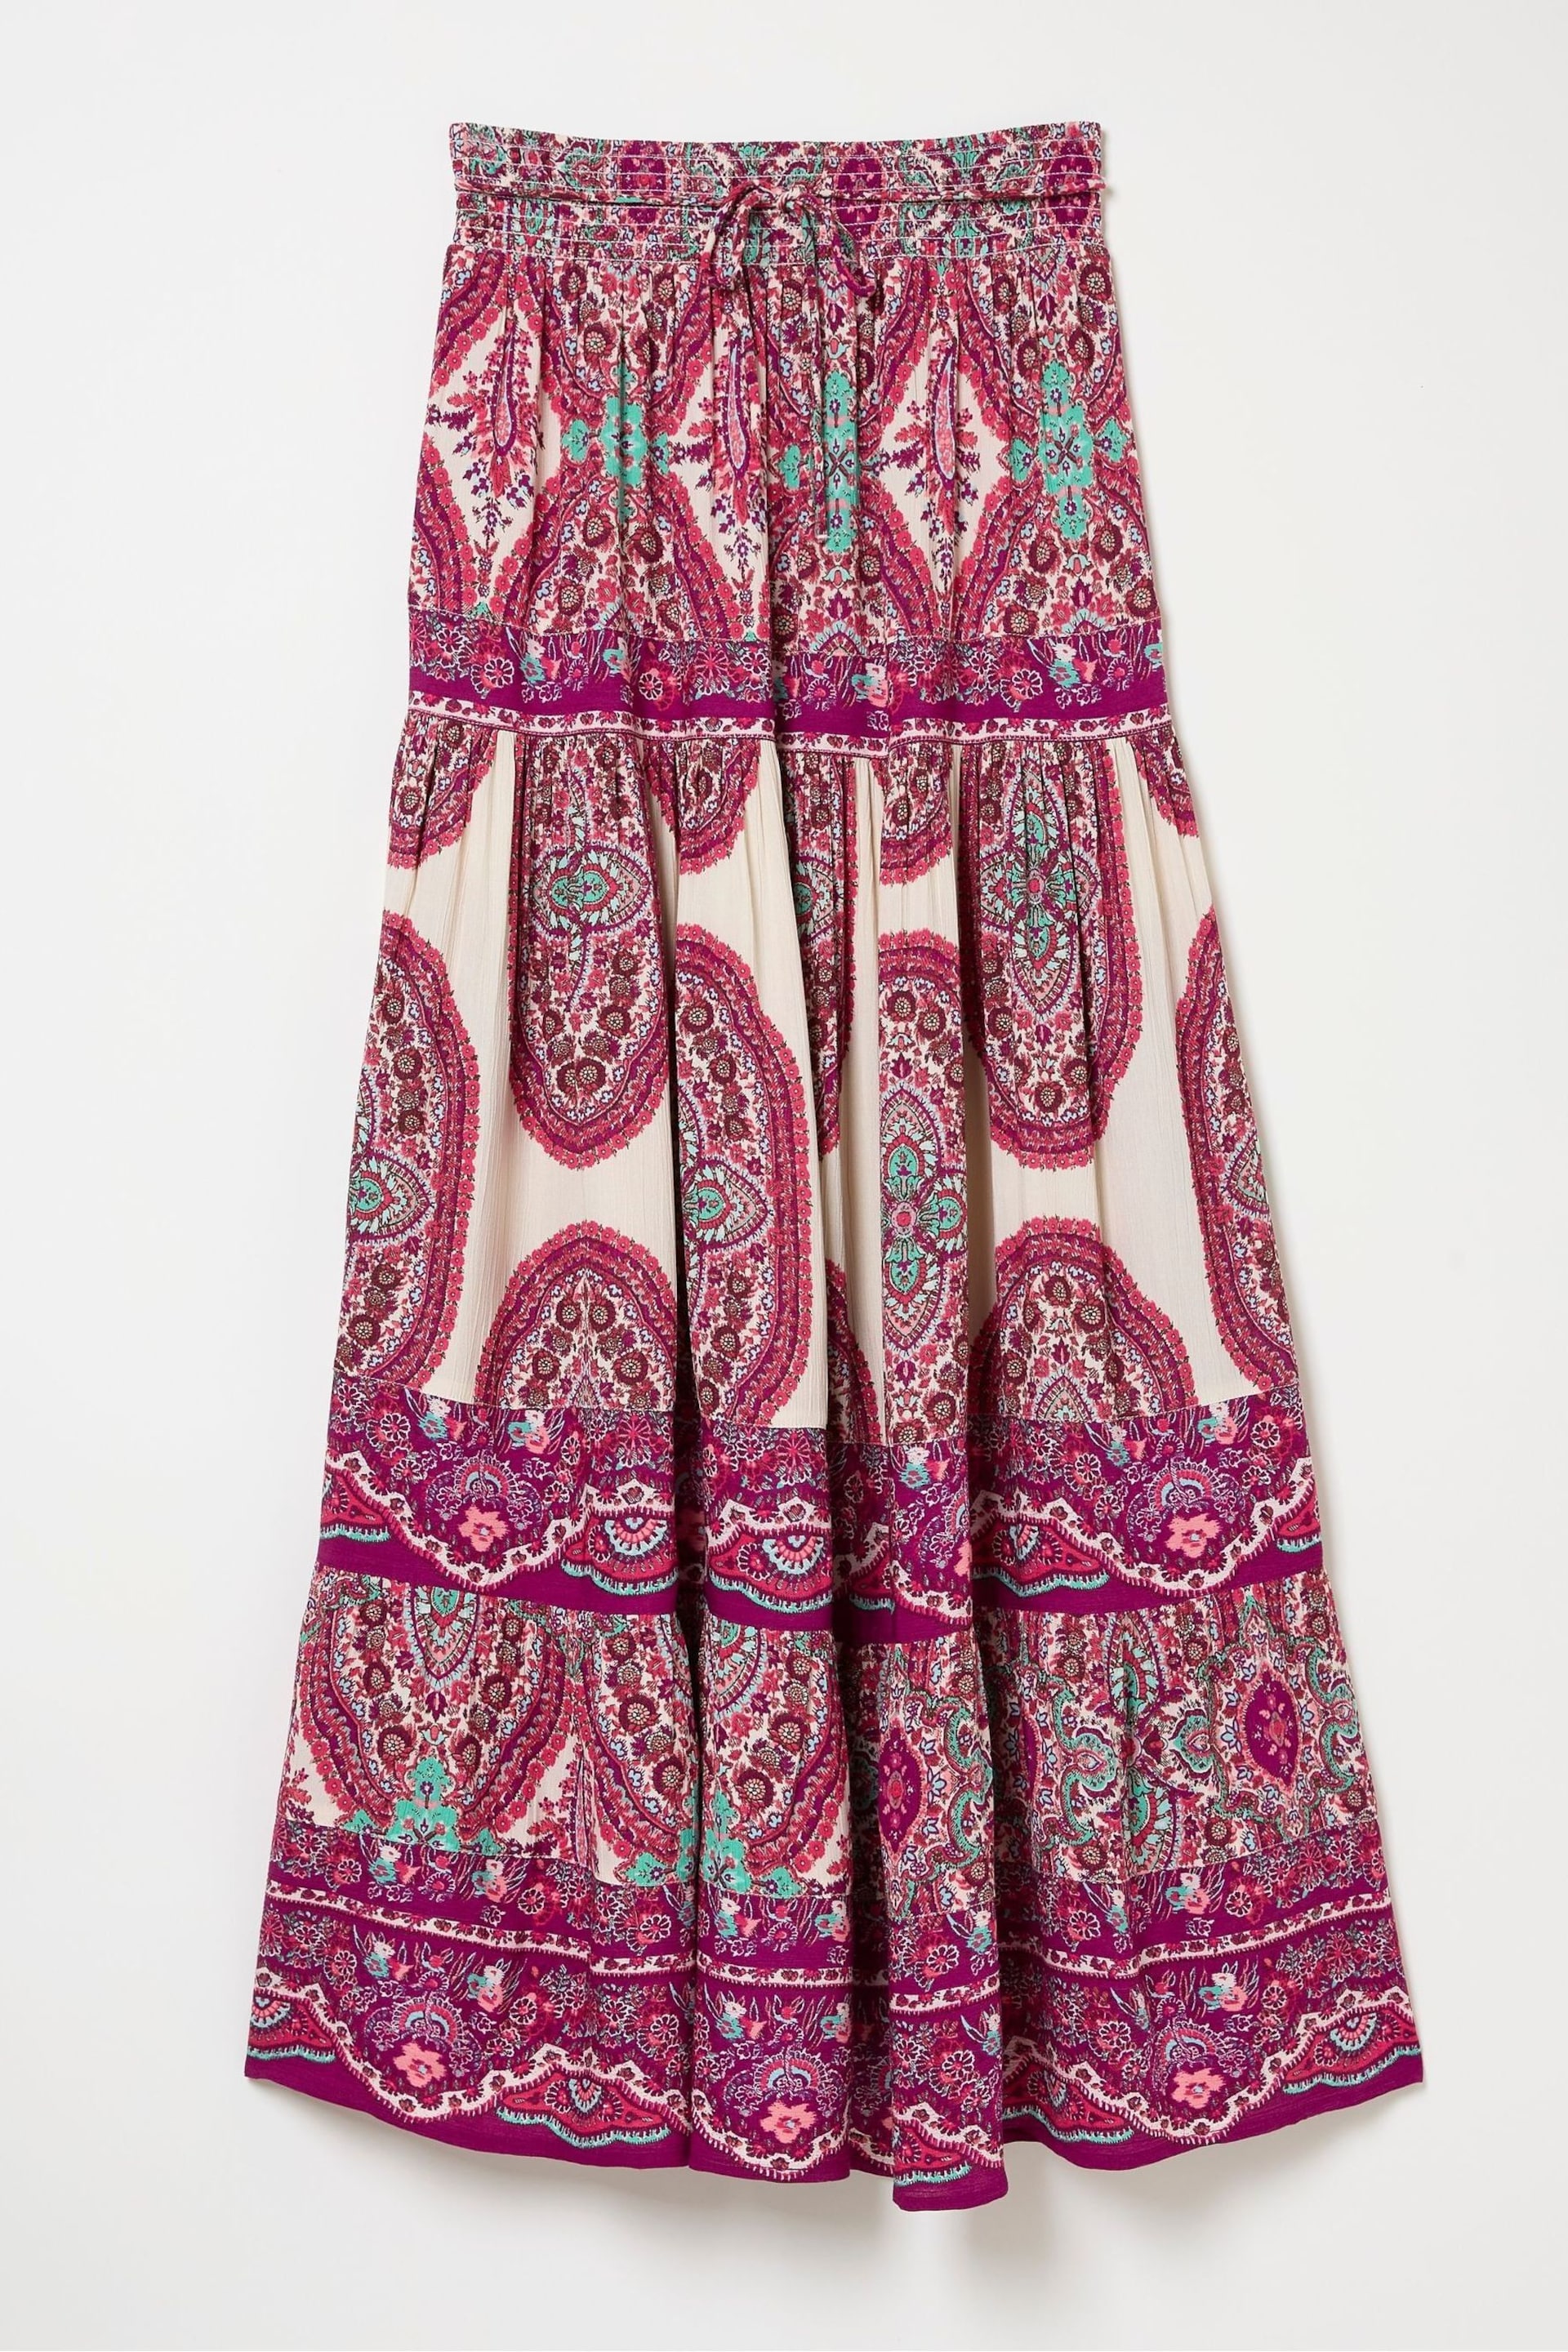 FatFace Purple Detail Paisley Maxi Skirt - Image 5 of 5